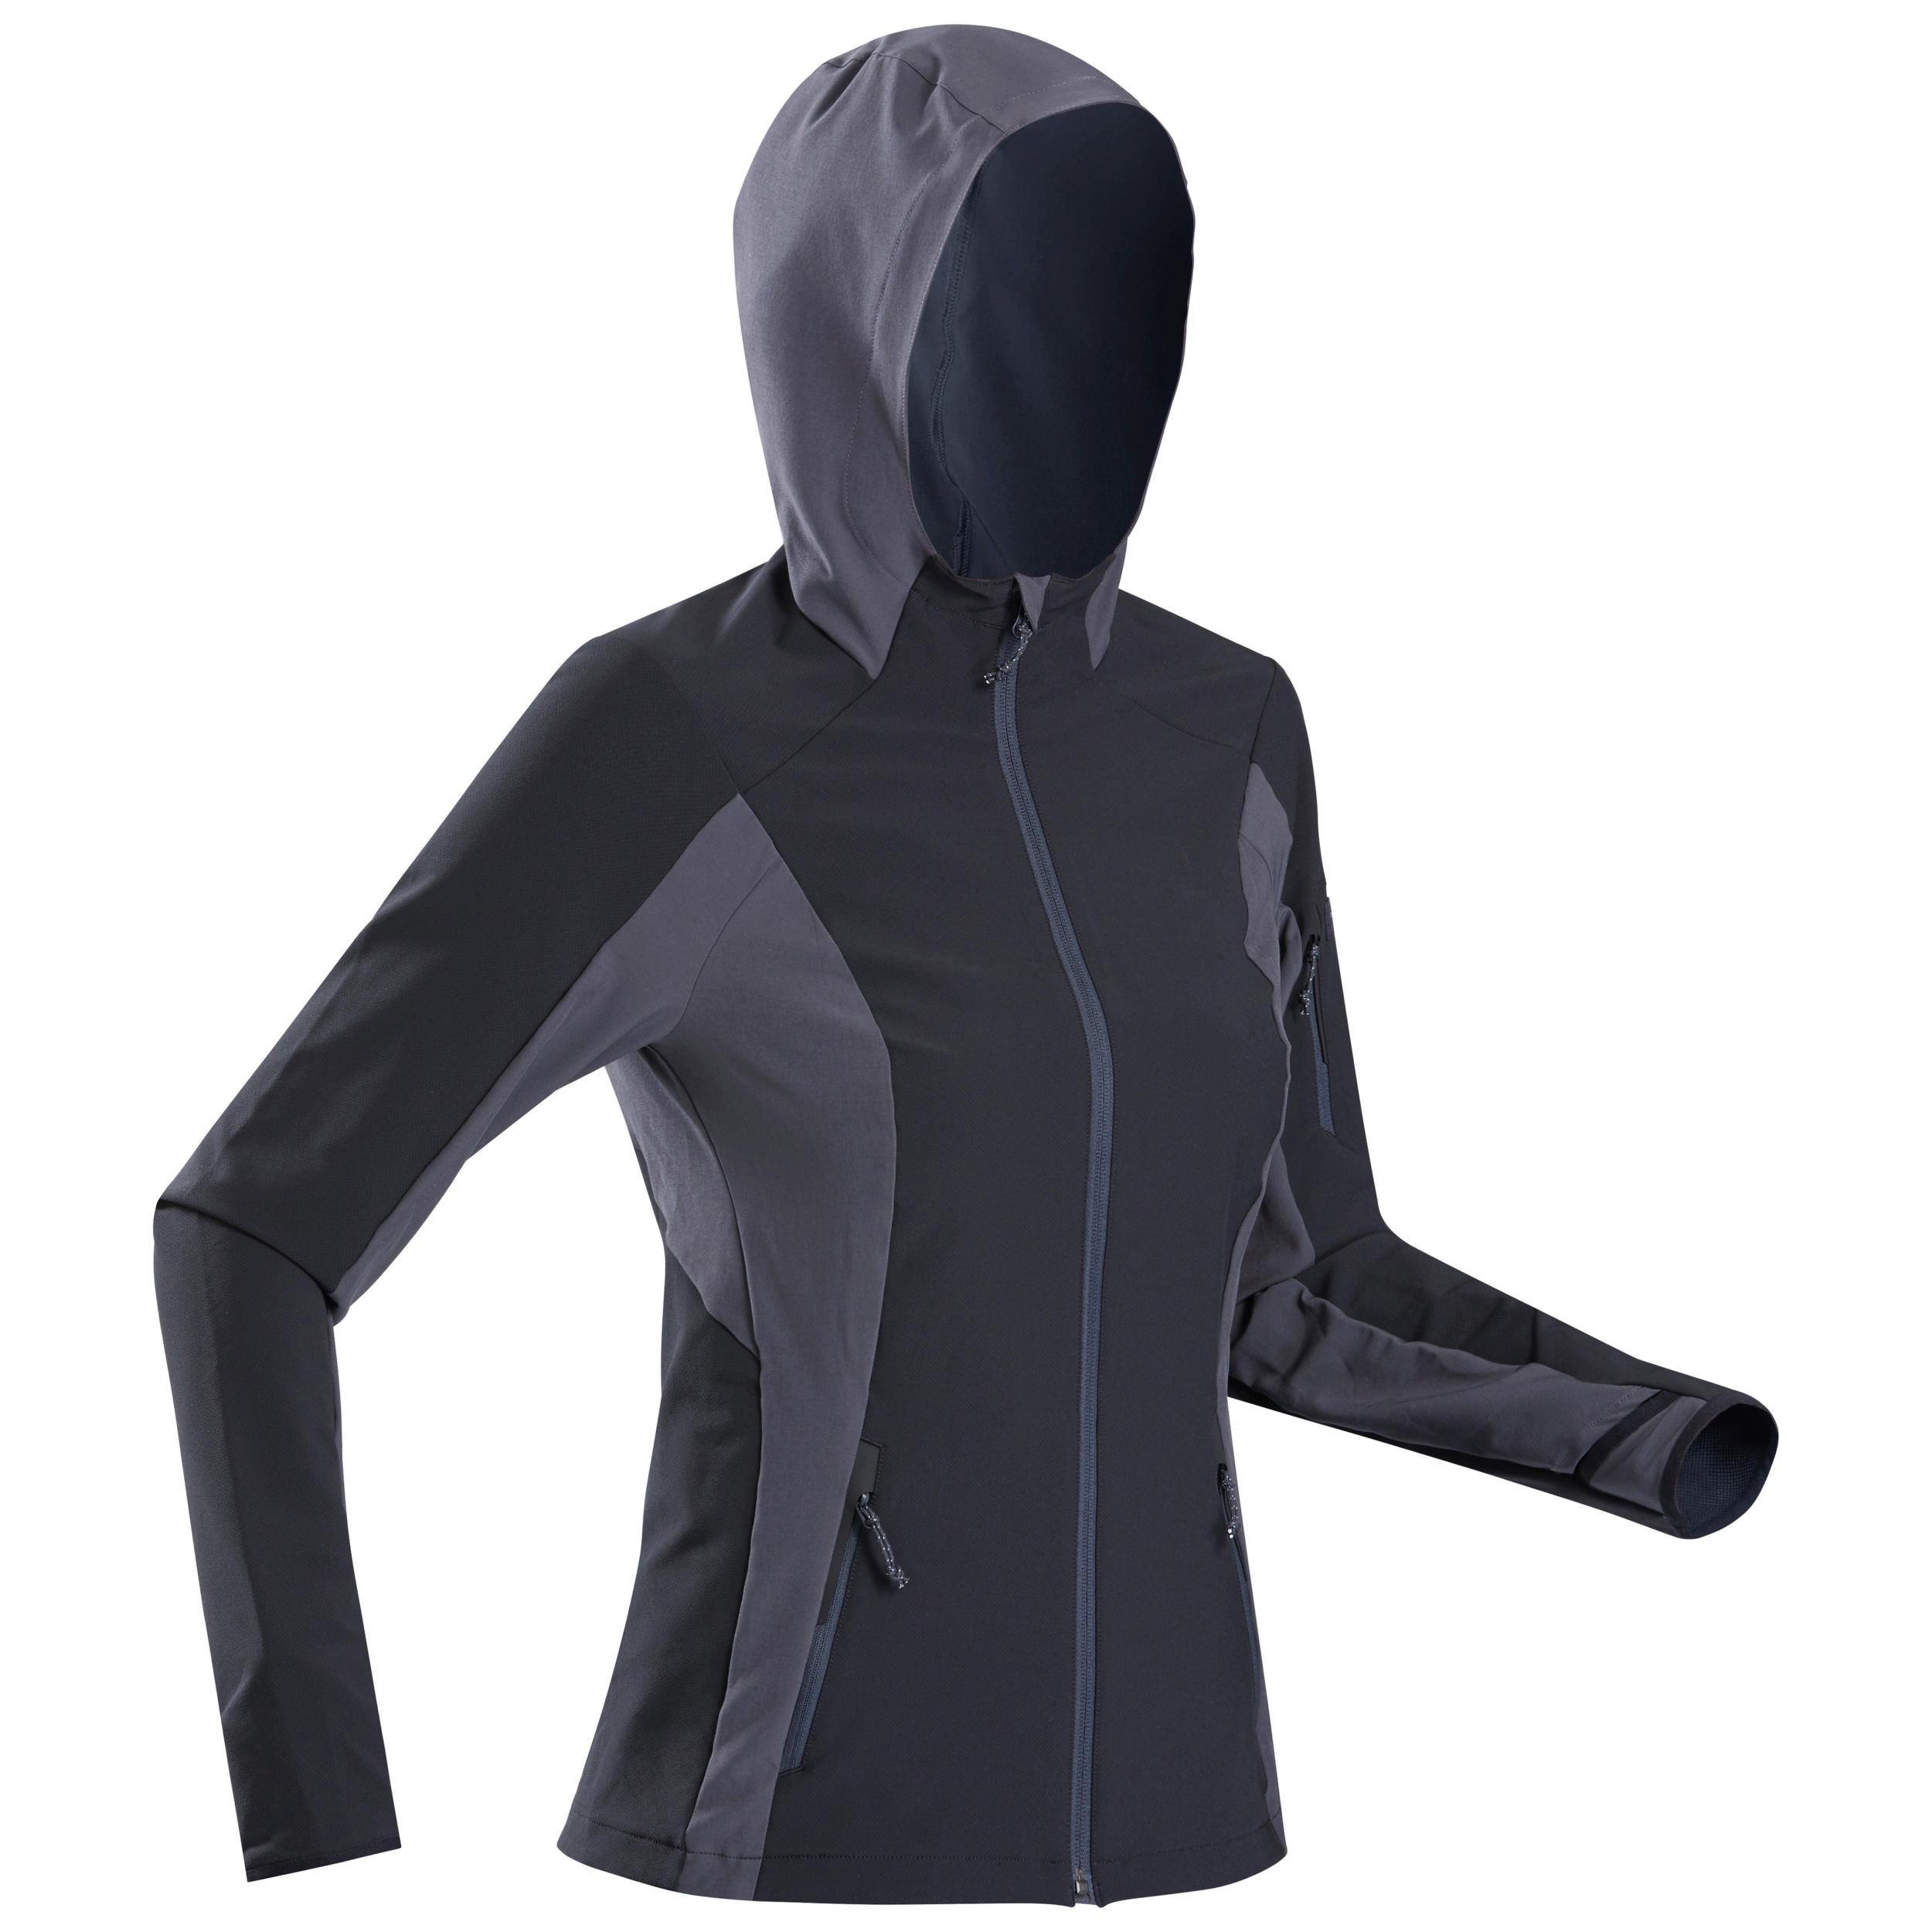 MT 900 hiking jacket - Women - Black, Carbon grey - Forclaz - Decathlon